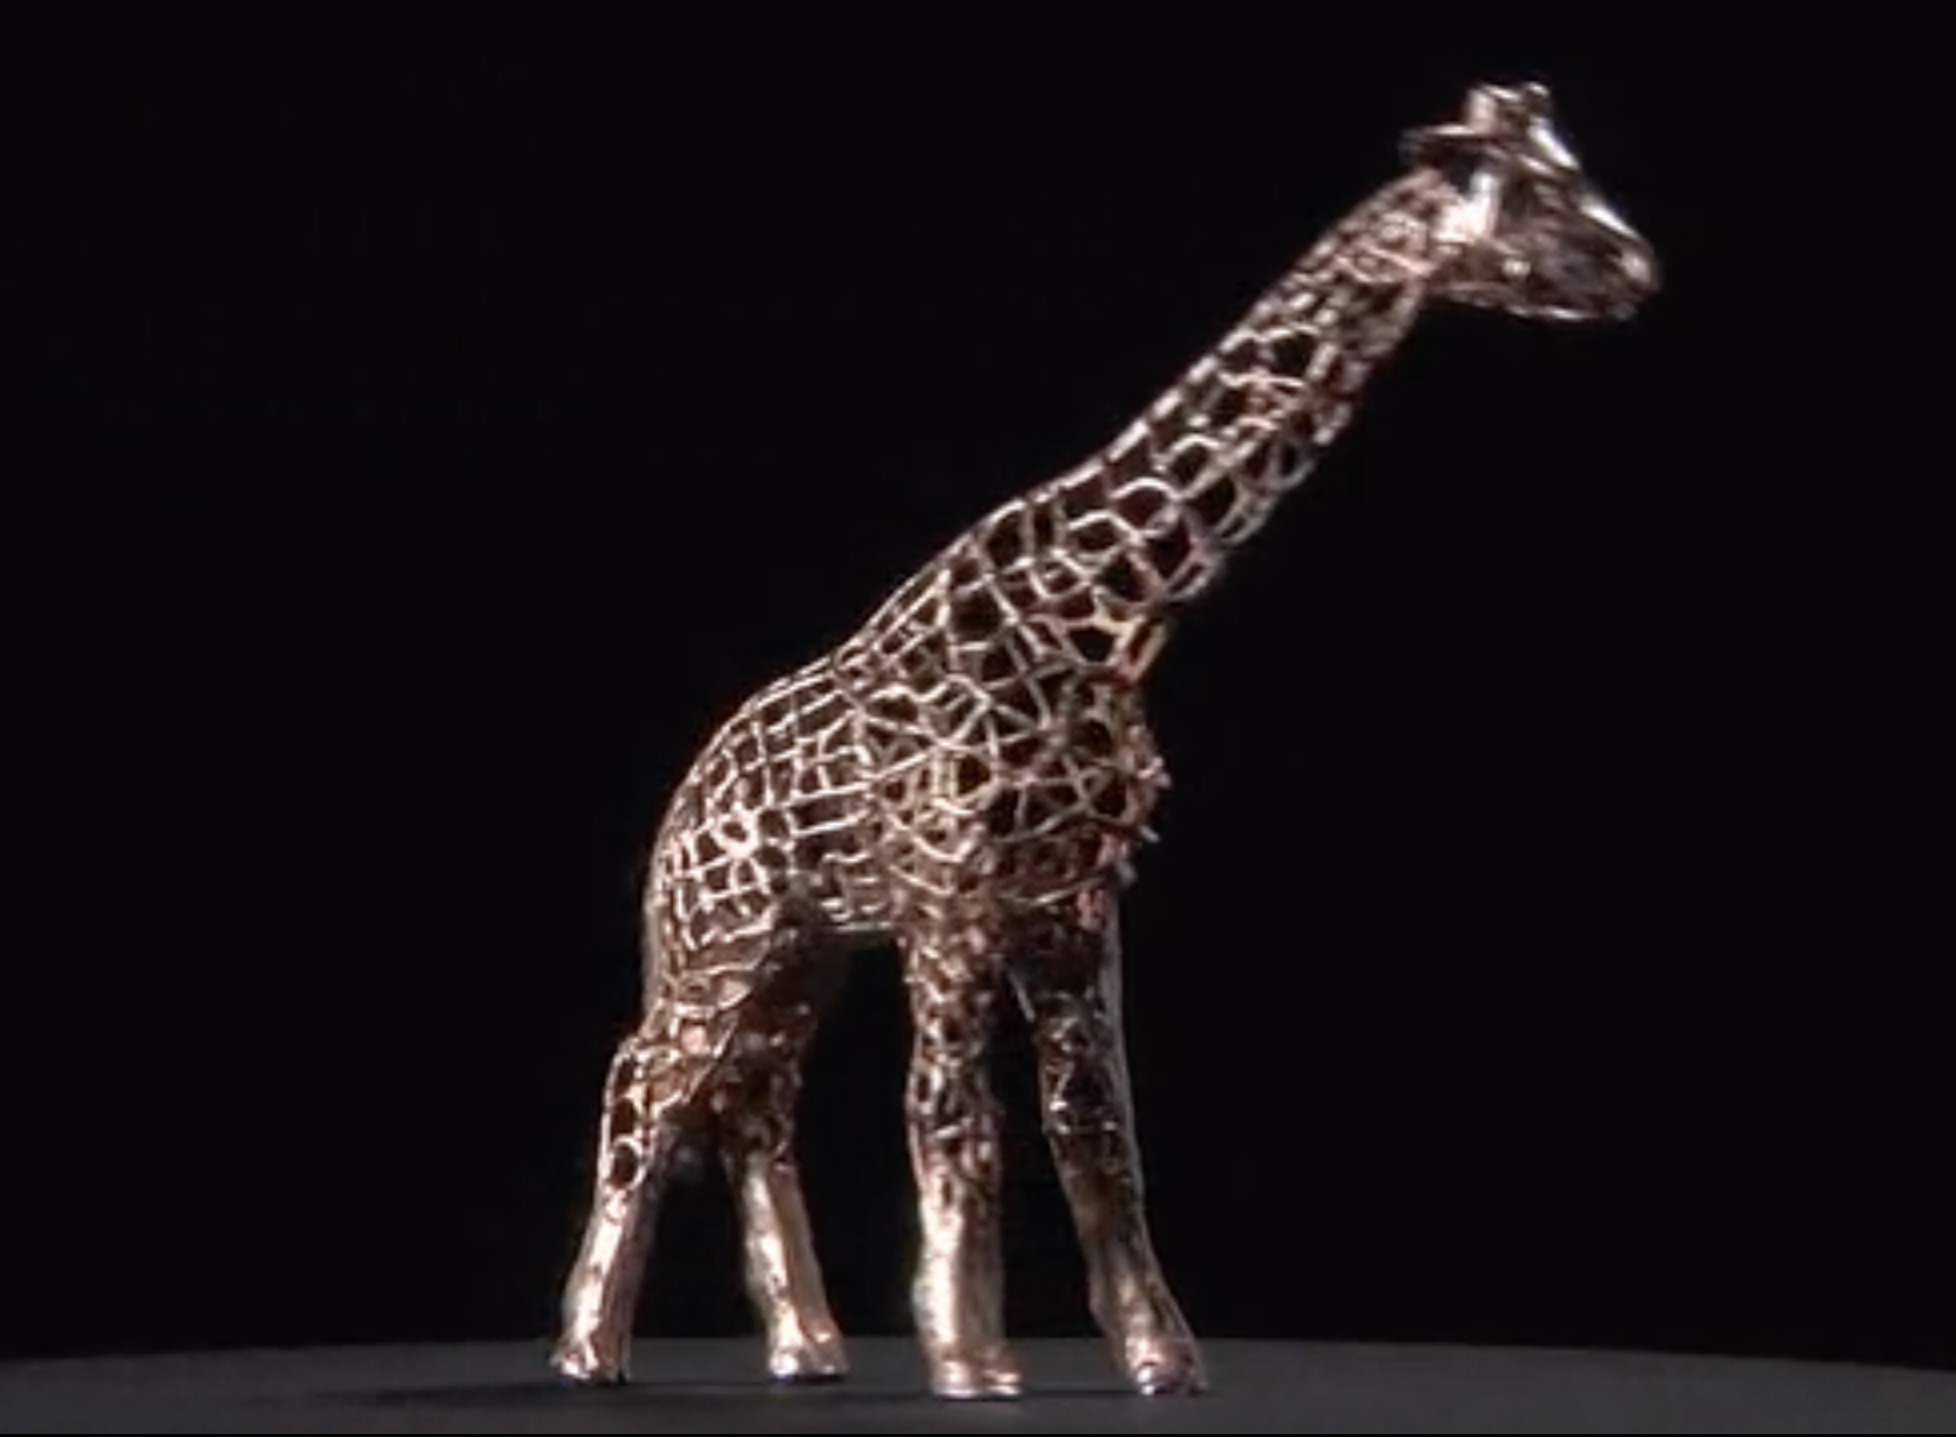  3D printed giraffe 